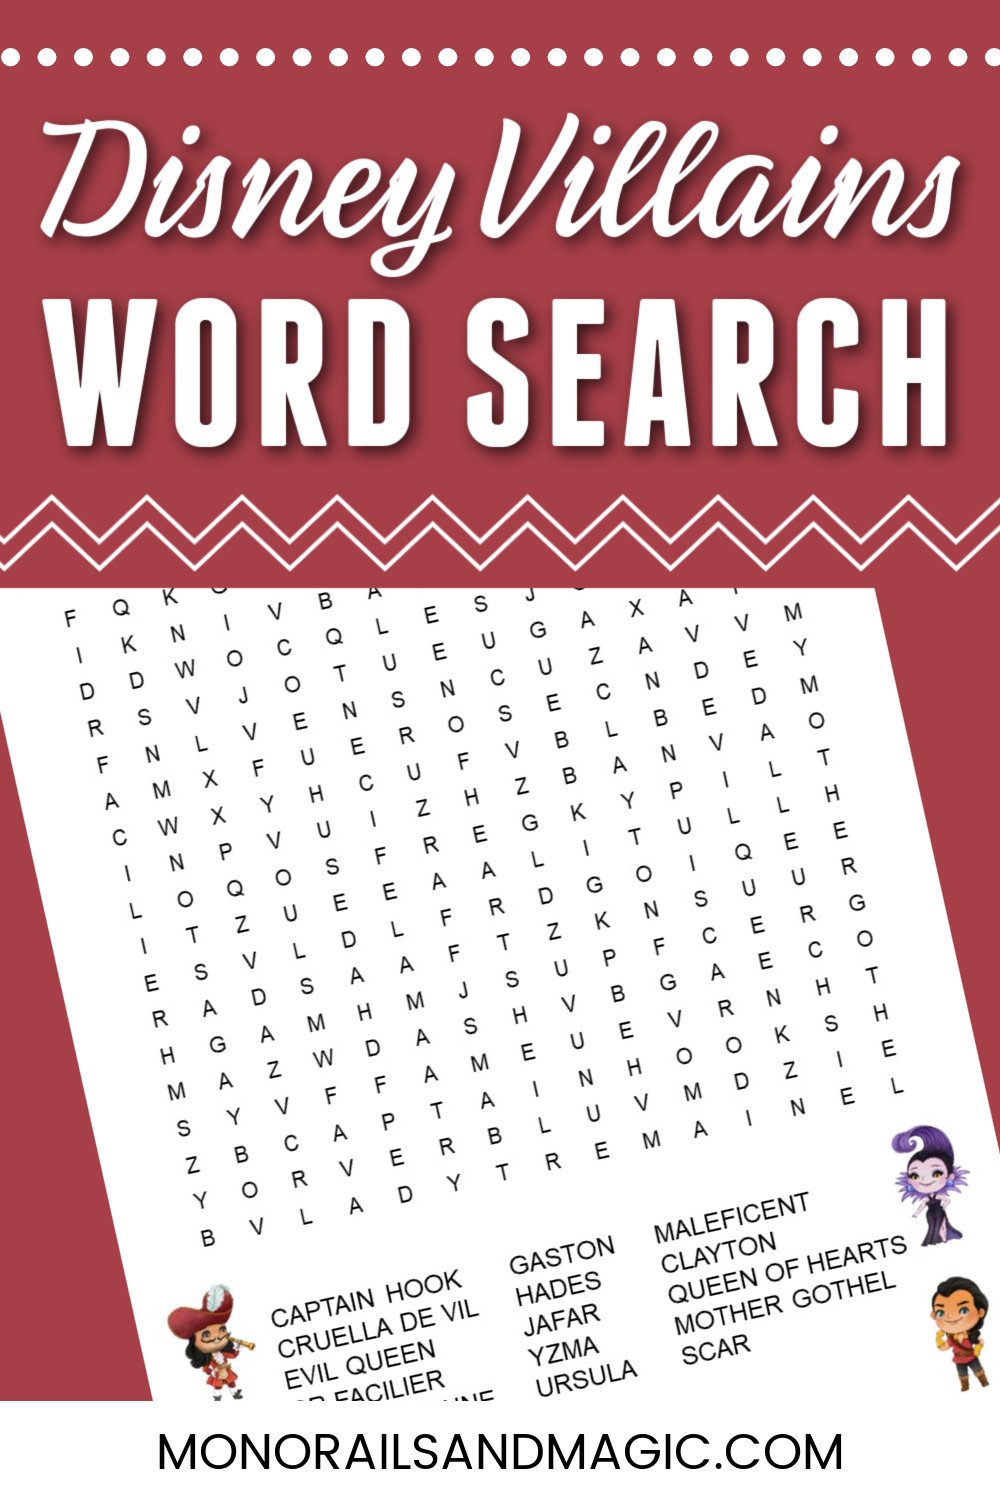 Free printable Disney villains word search for kids.